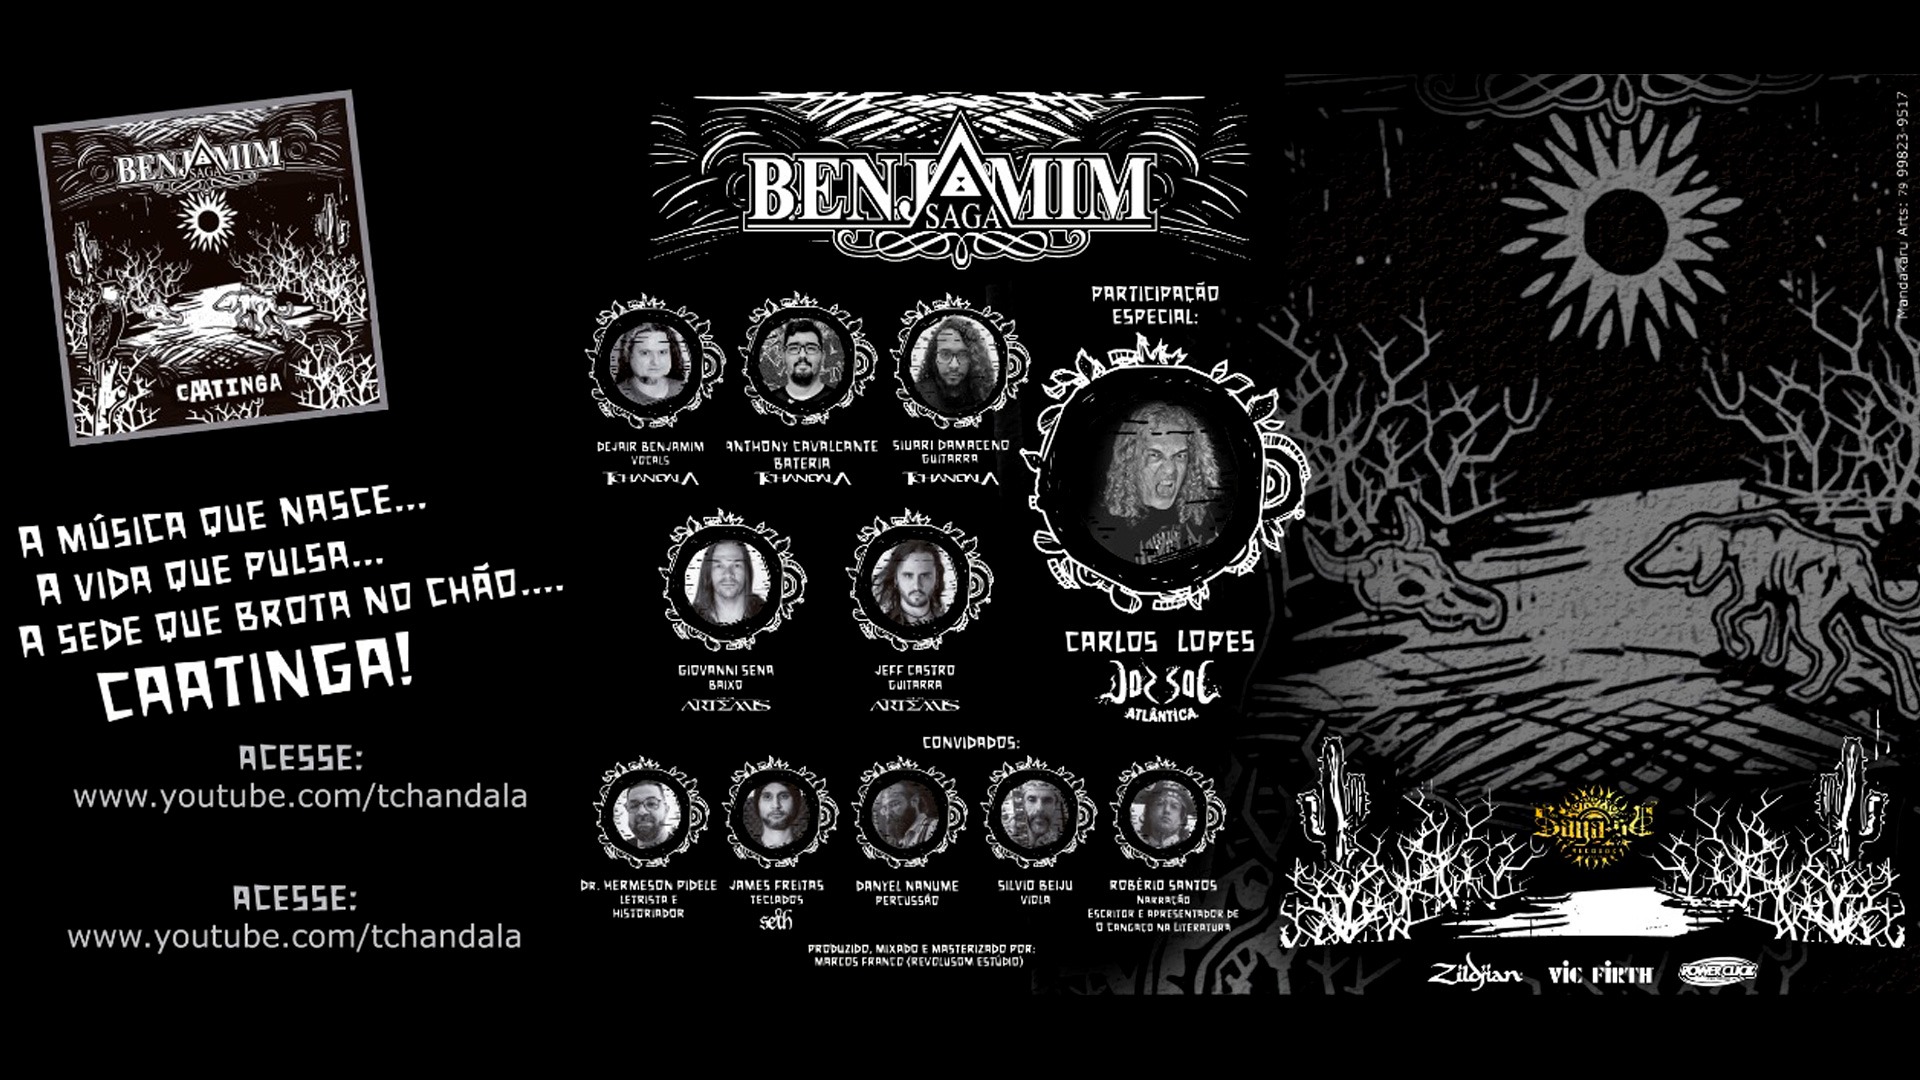 Benjamim Saga une Dorsal Atlântica, Age of Artemis e Tchandala no single ‘Caatinga’ 